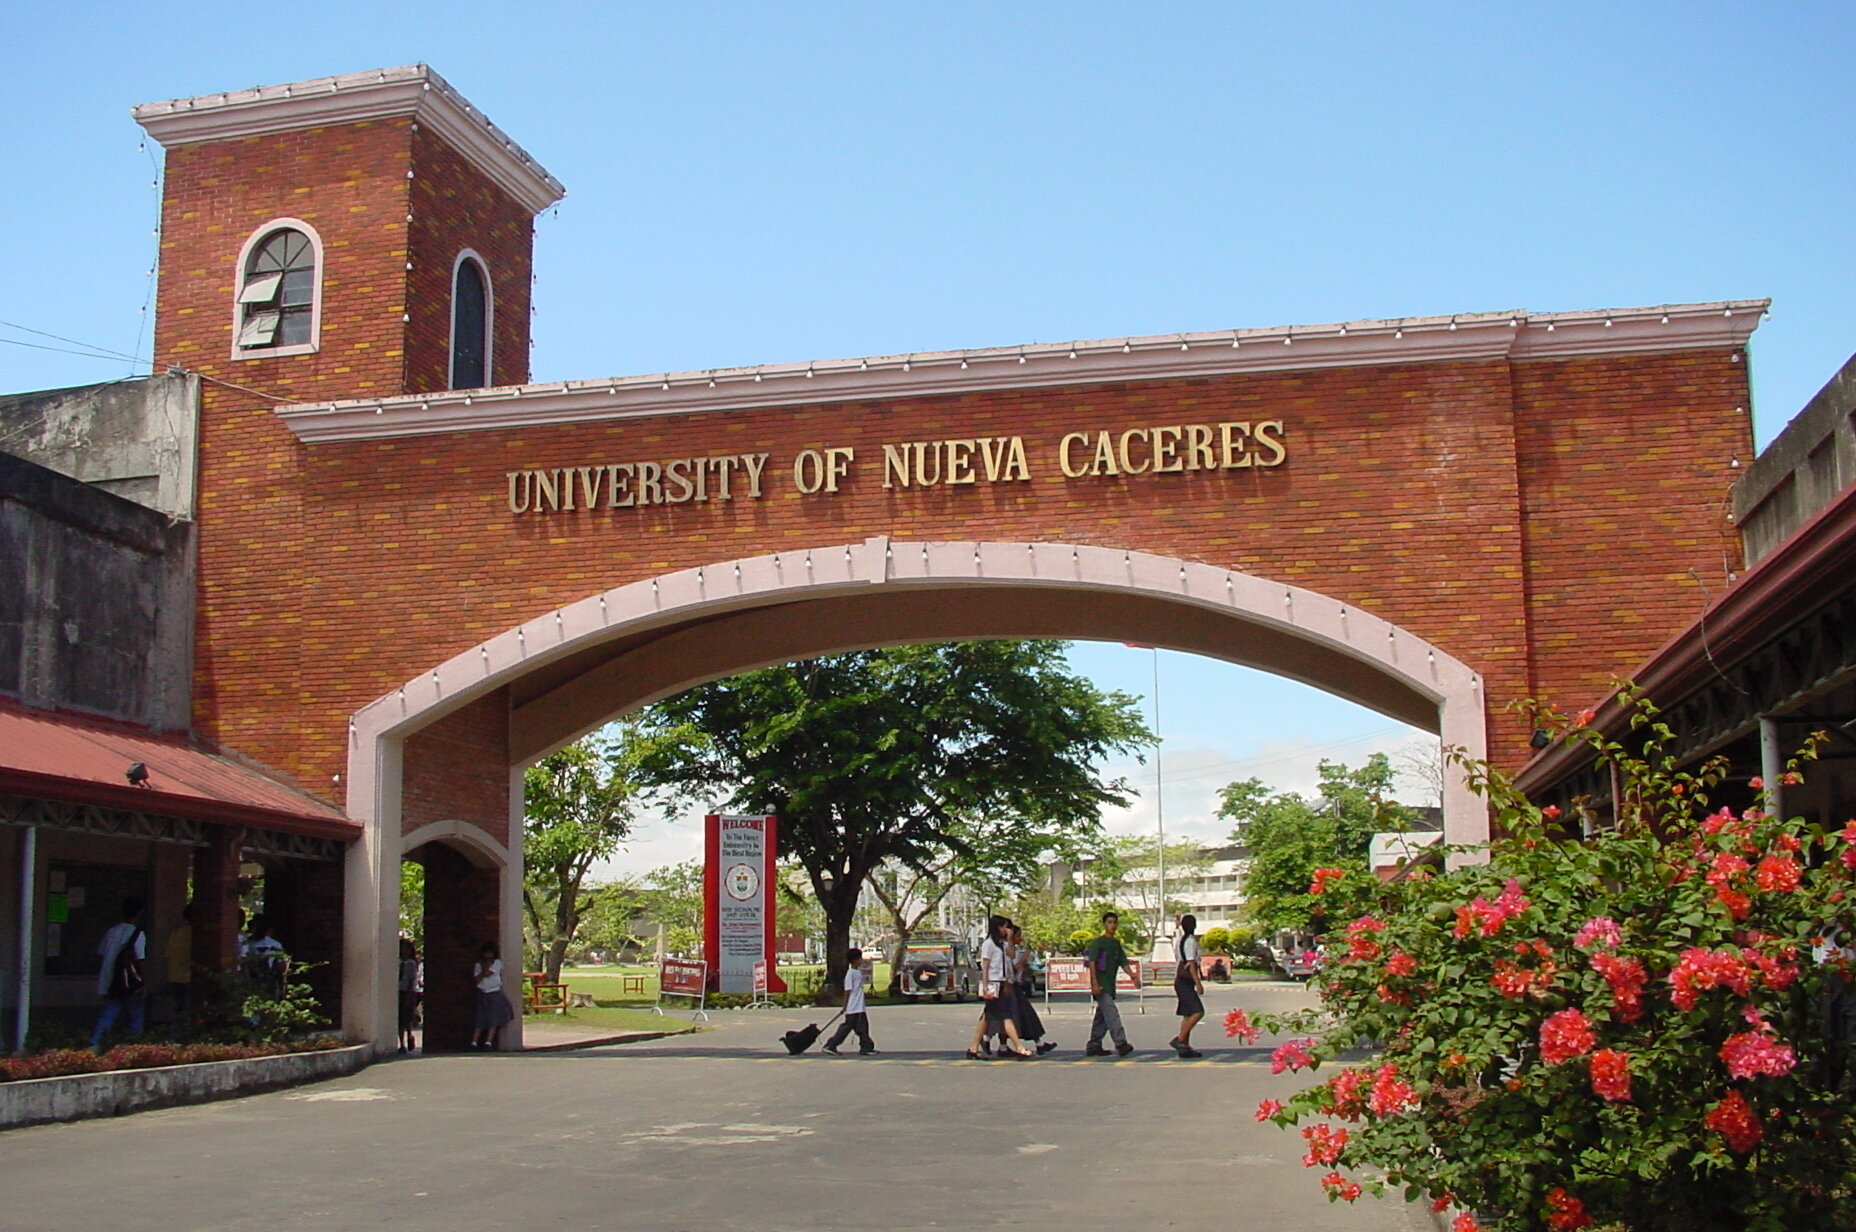 University of Nueva Caseres